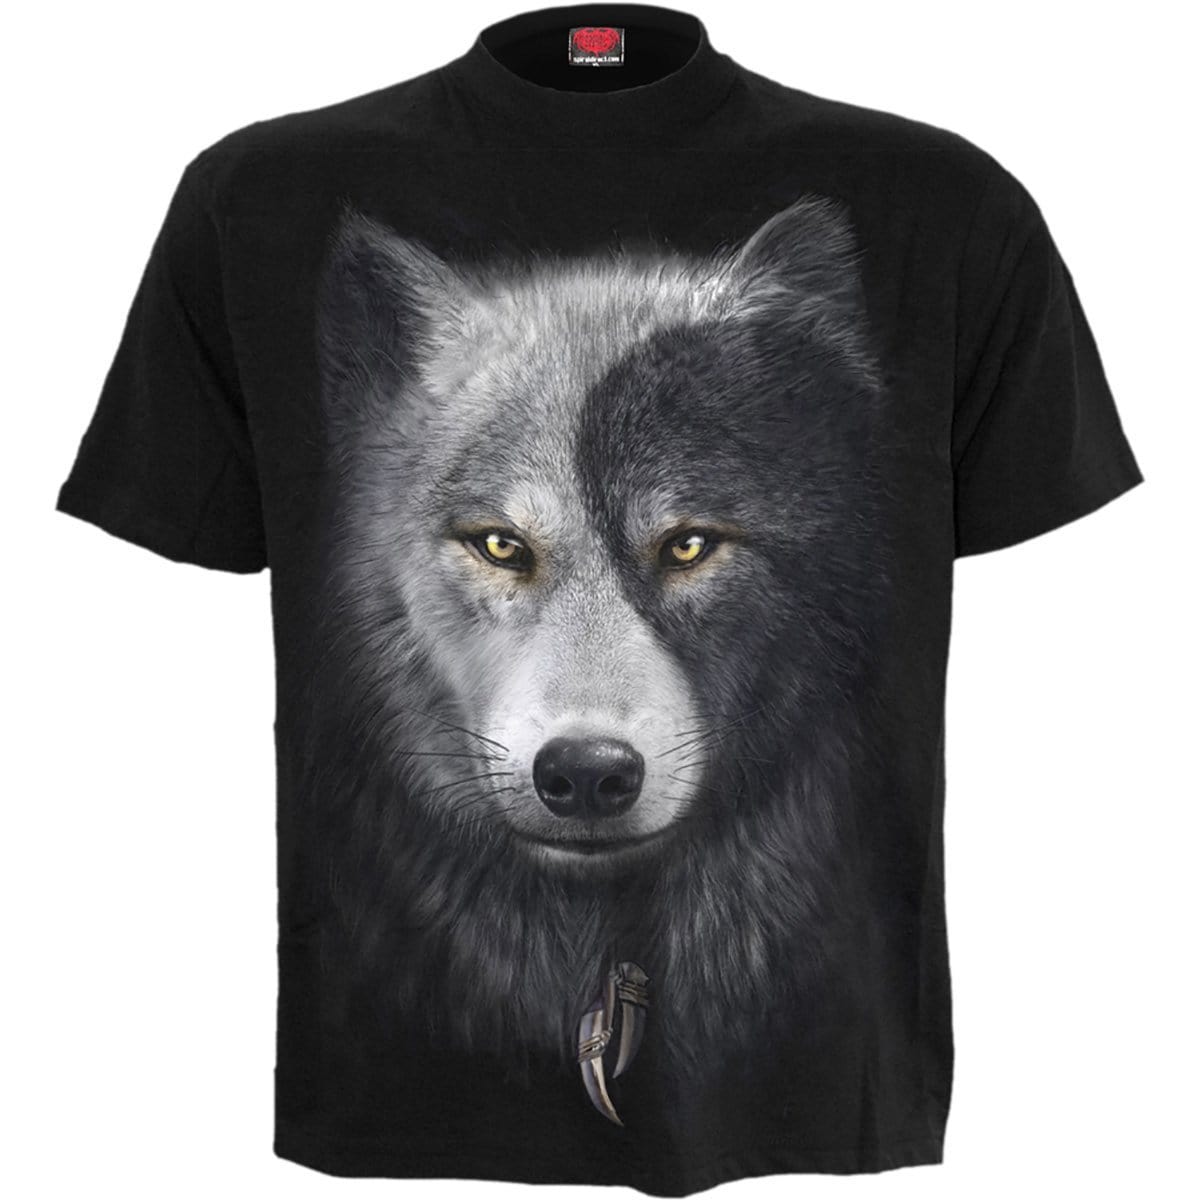 WOLF CHI - T-Shirt Black - Spiral USA